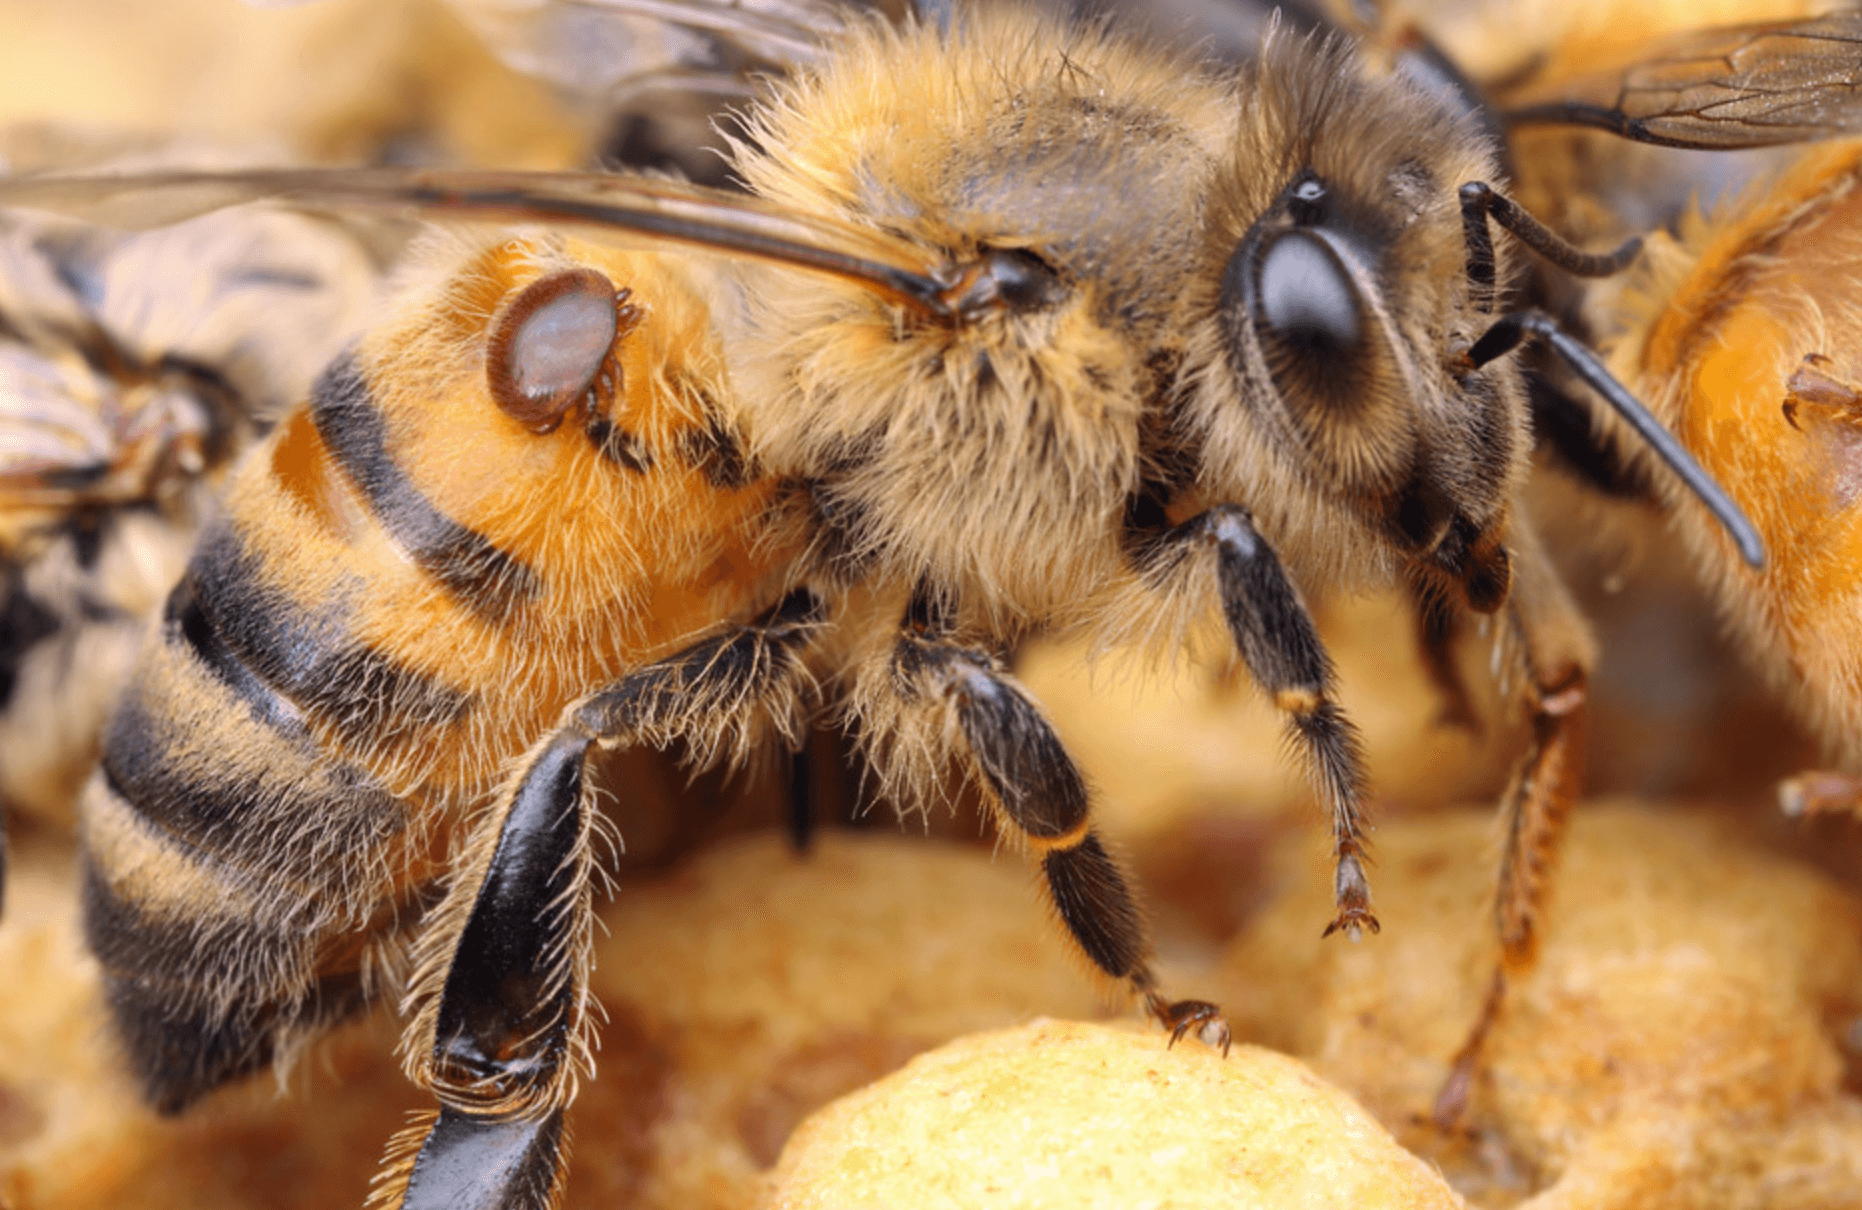 Honeybee with varroa on abdomen